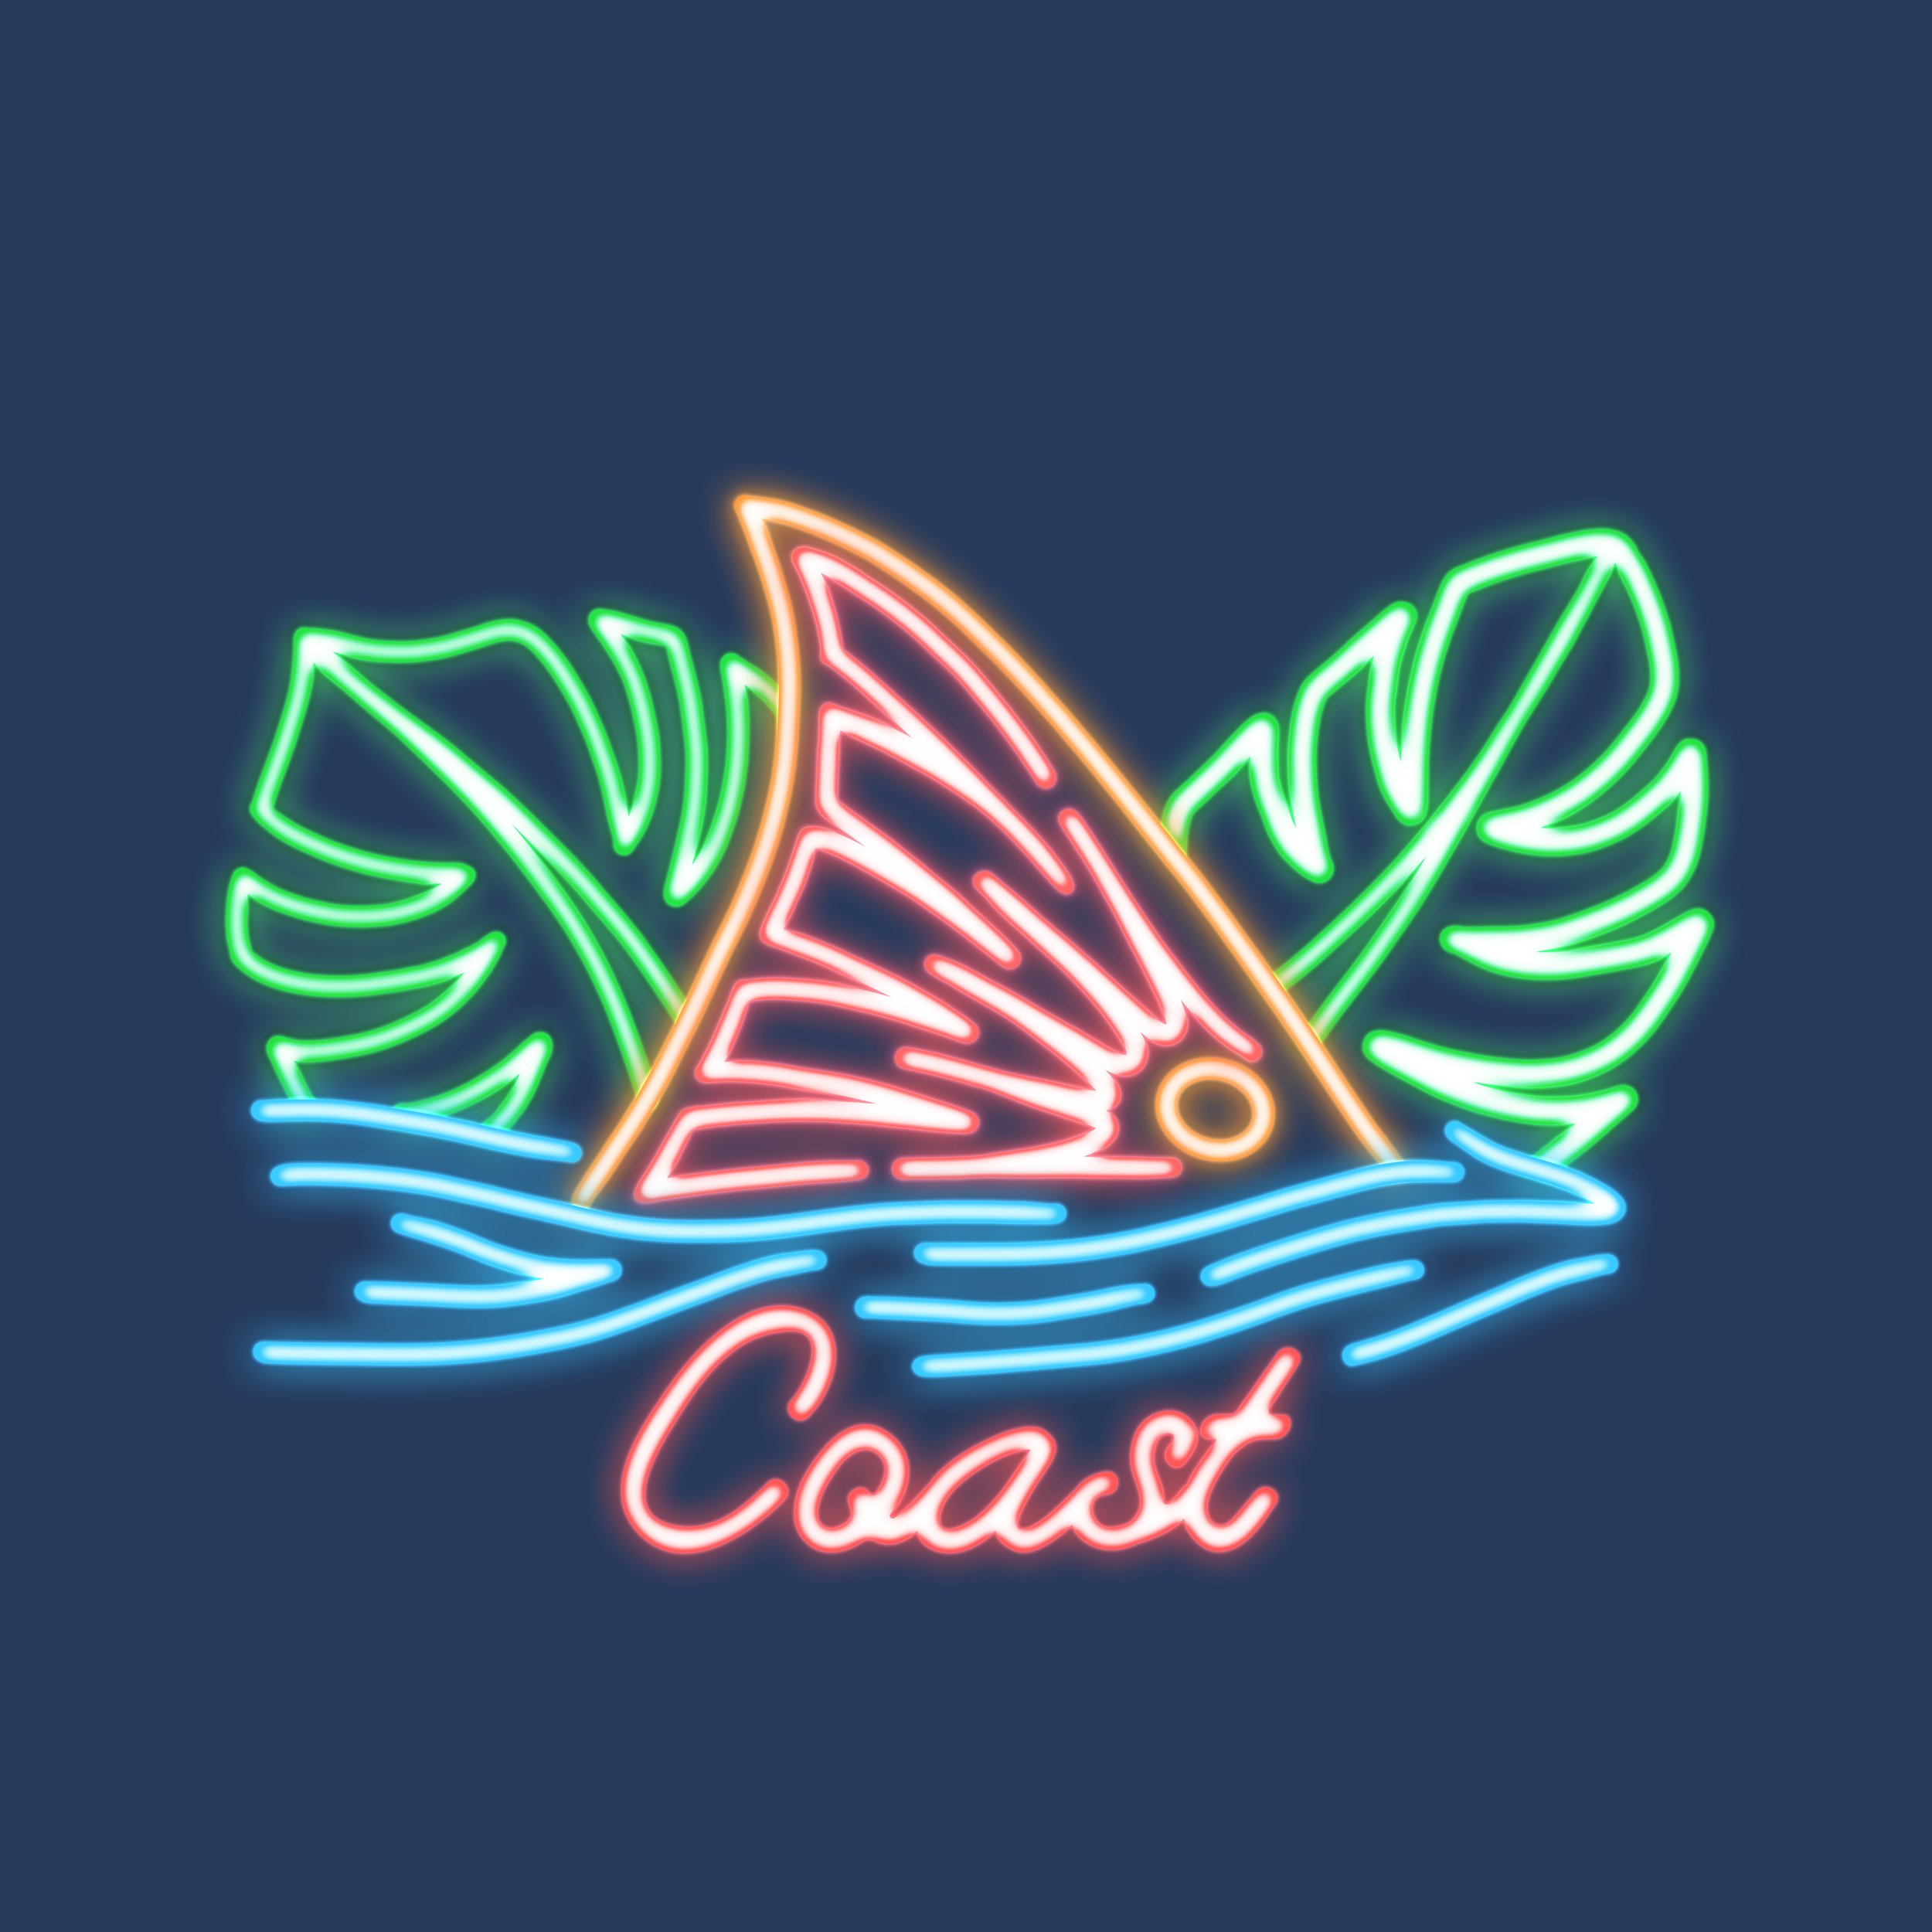 Coast_Neon Red Fish copy.jpg